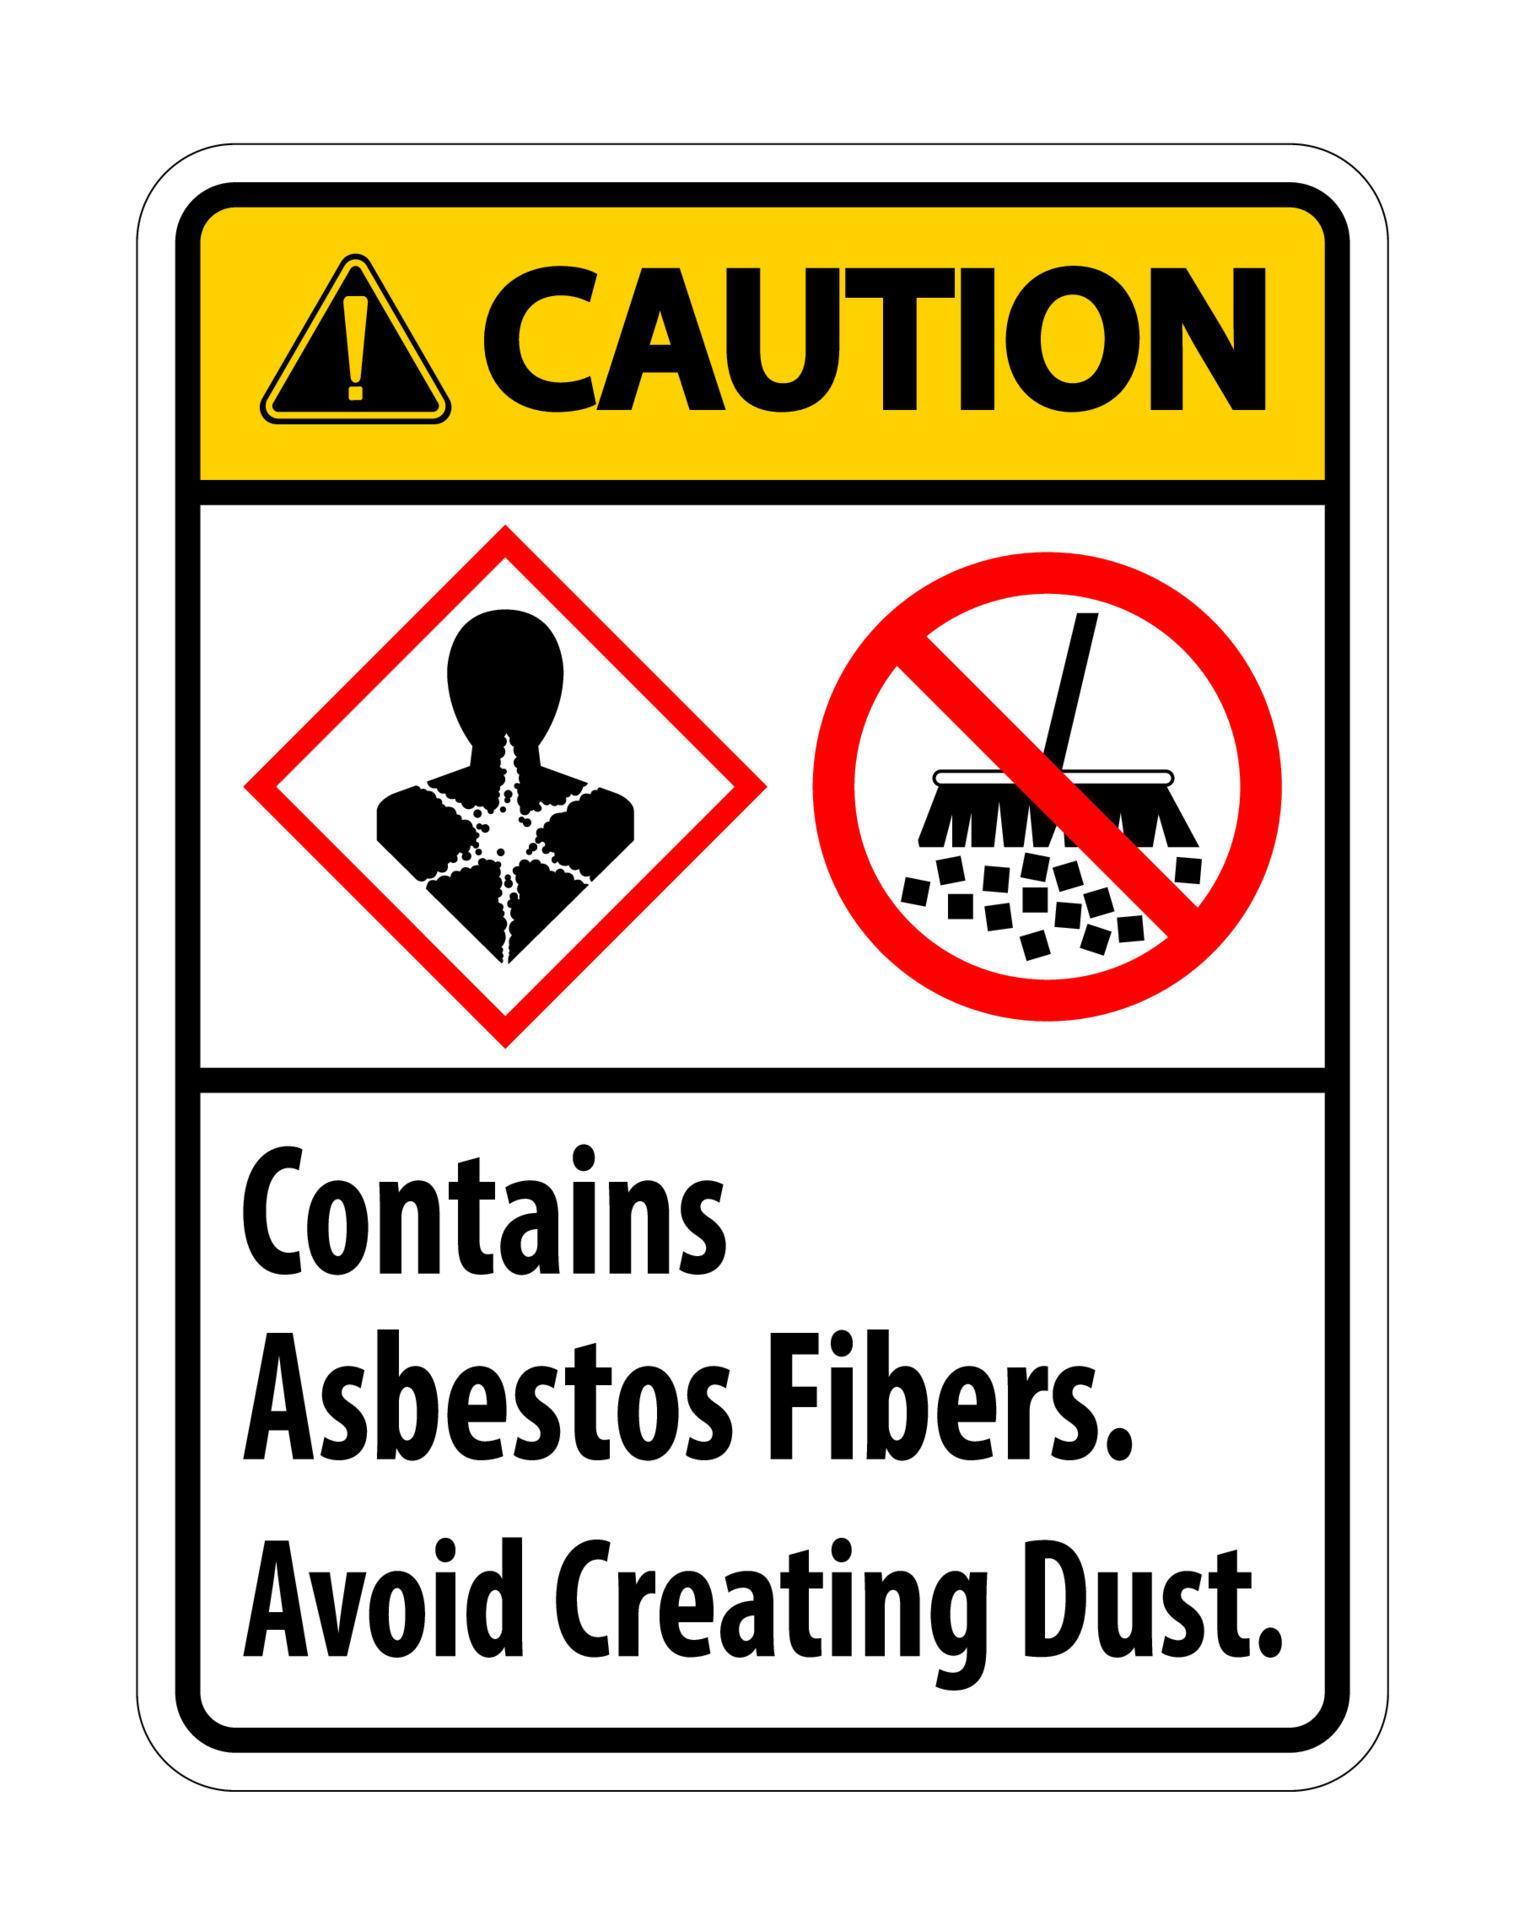 caution-label-contains-asbestos-fibers-avoid-creating-dust-3553009